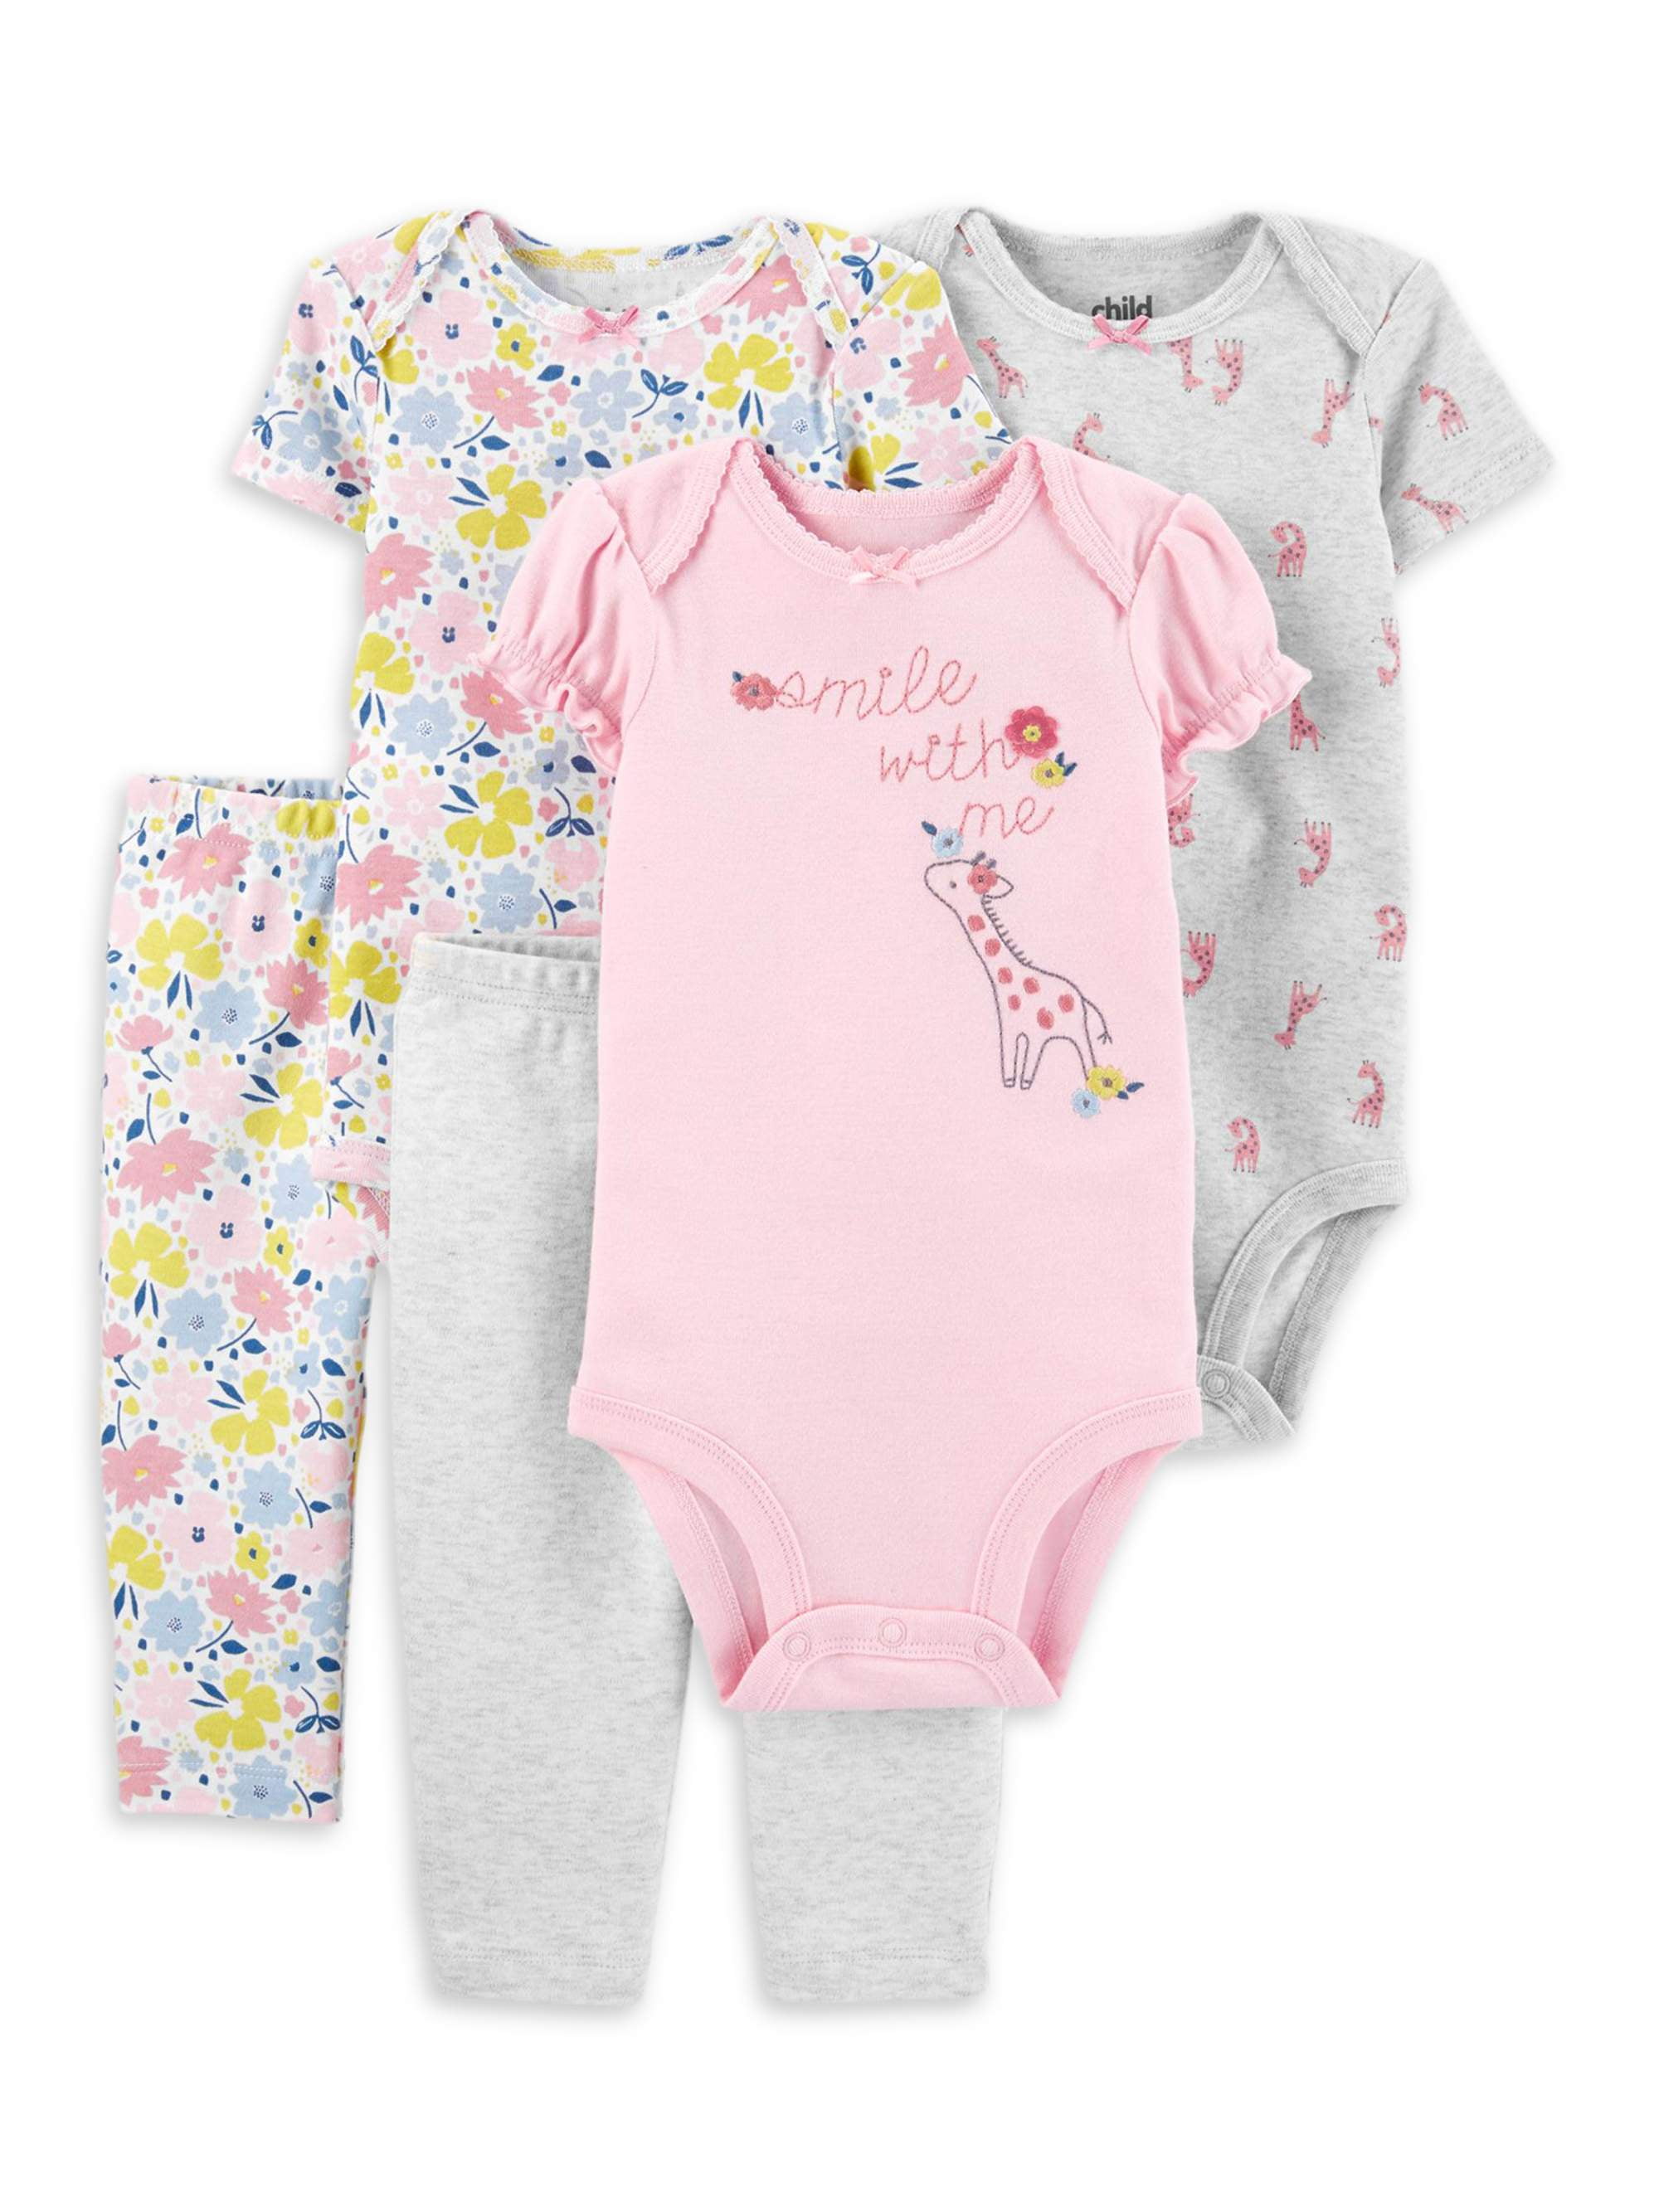 Sz 24 Mos Baby Girl 2 PCS Clothing Set Outfit Cute Top w/ Owl Design & Leggings 